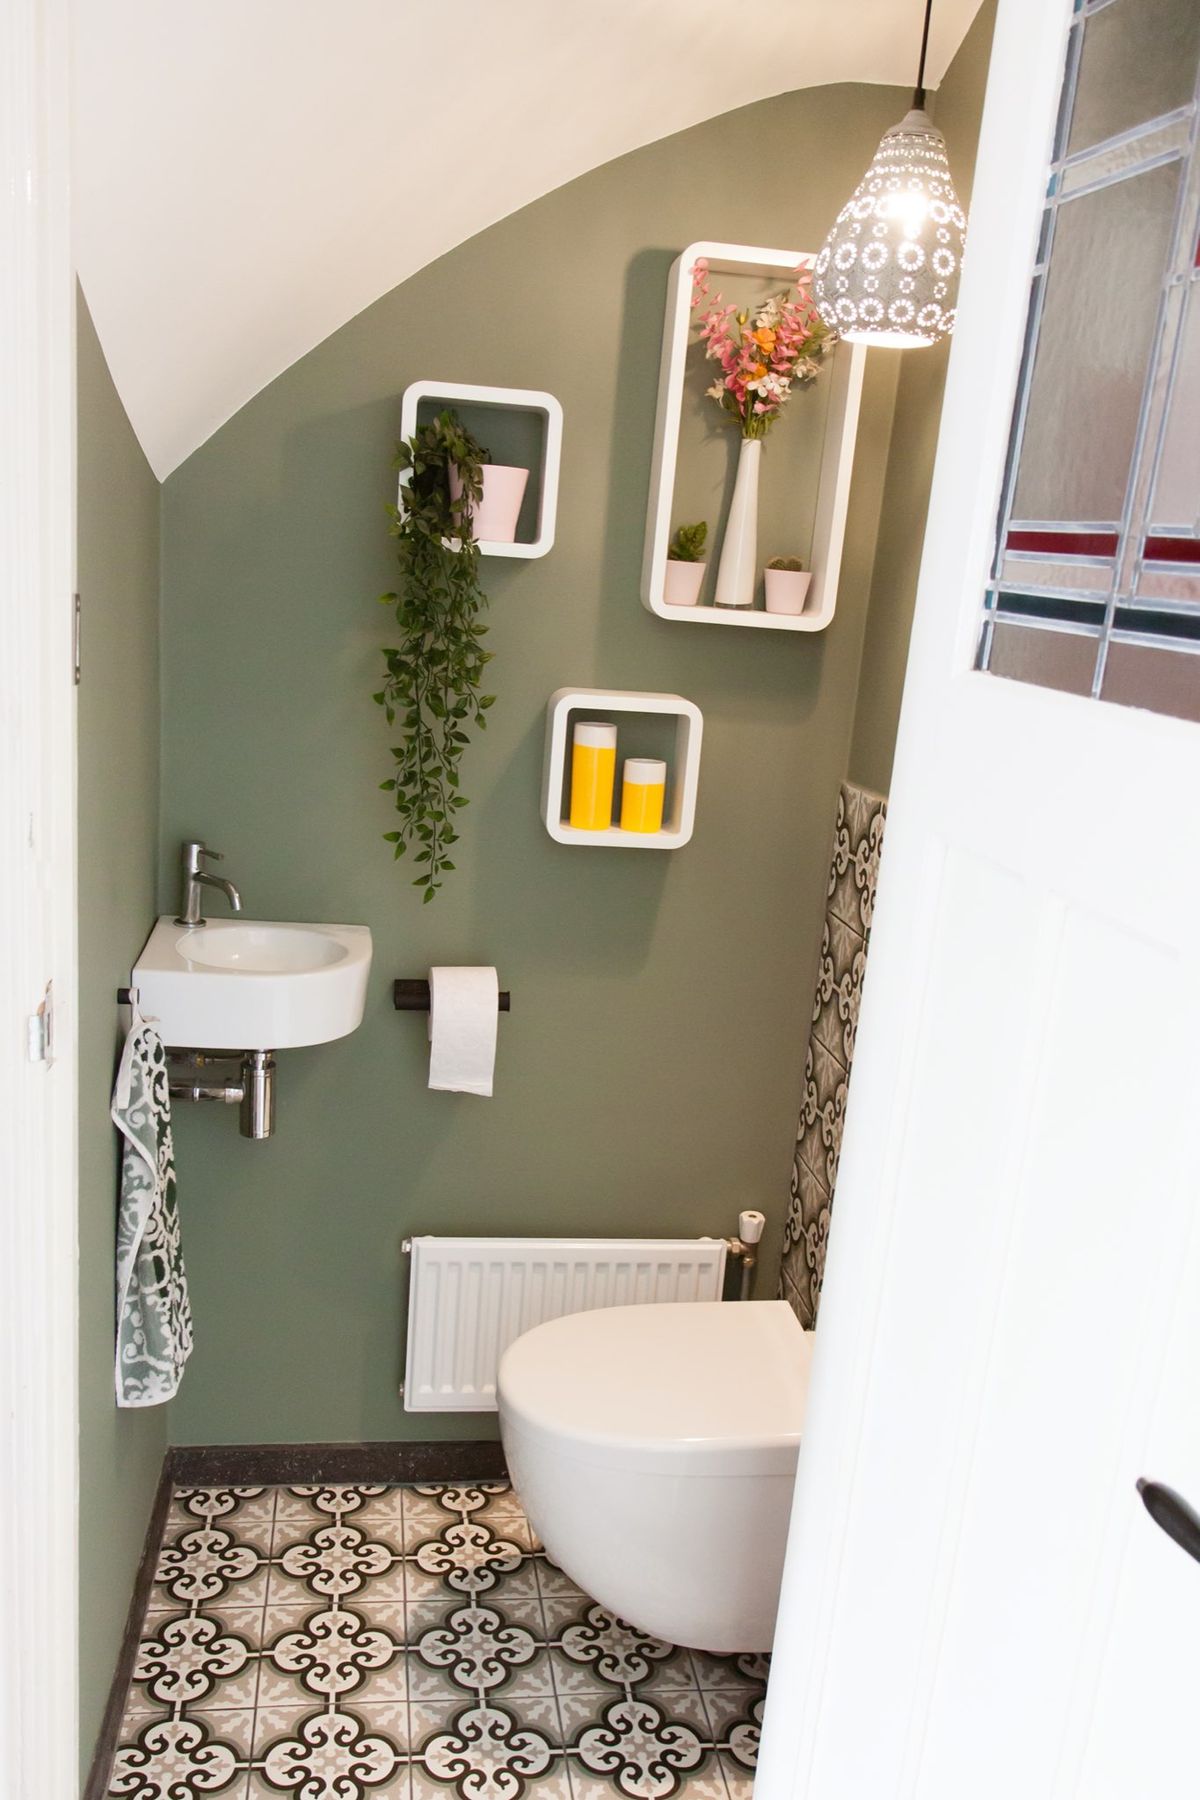 Patroontegels, toilet, groene muur, fonteintje